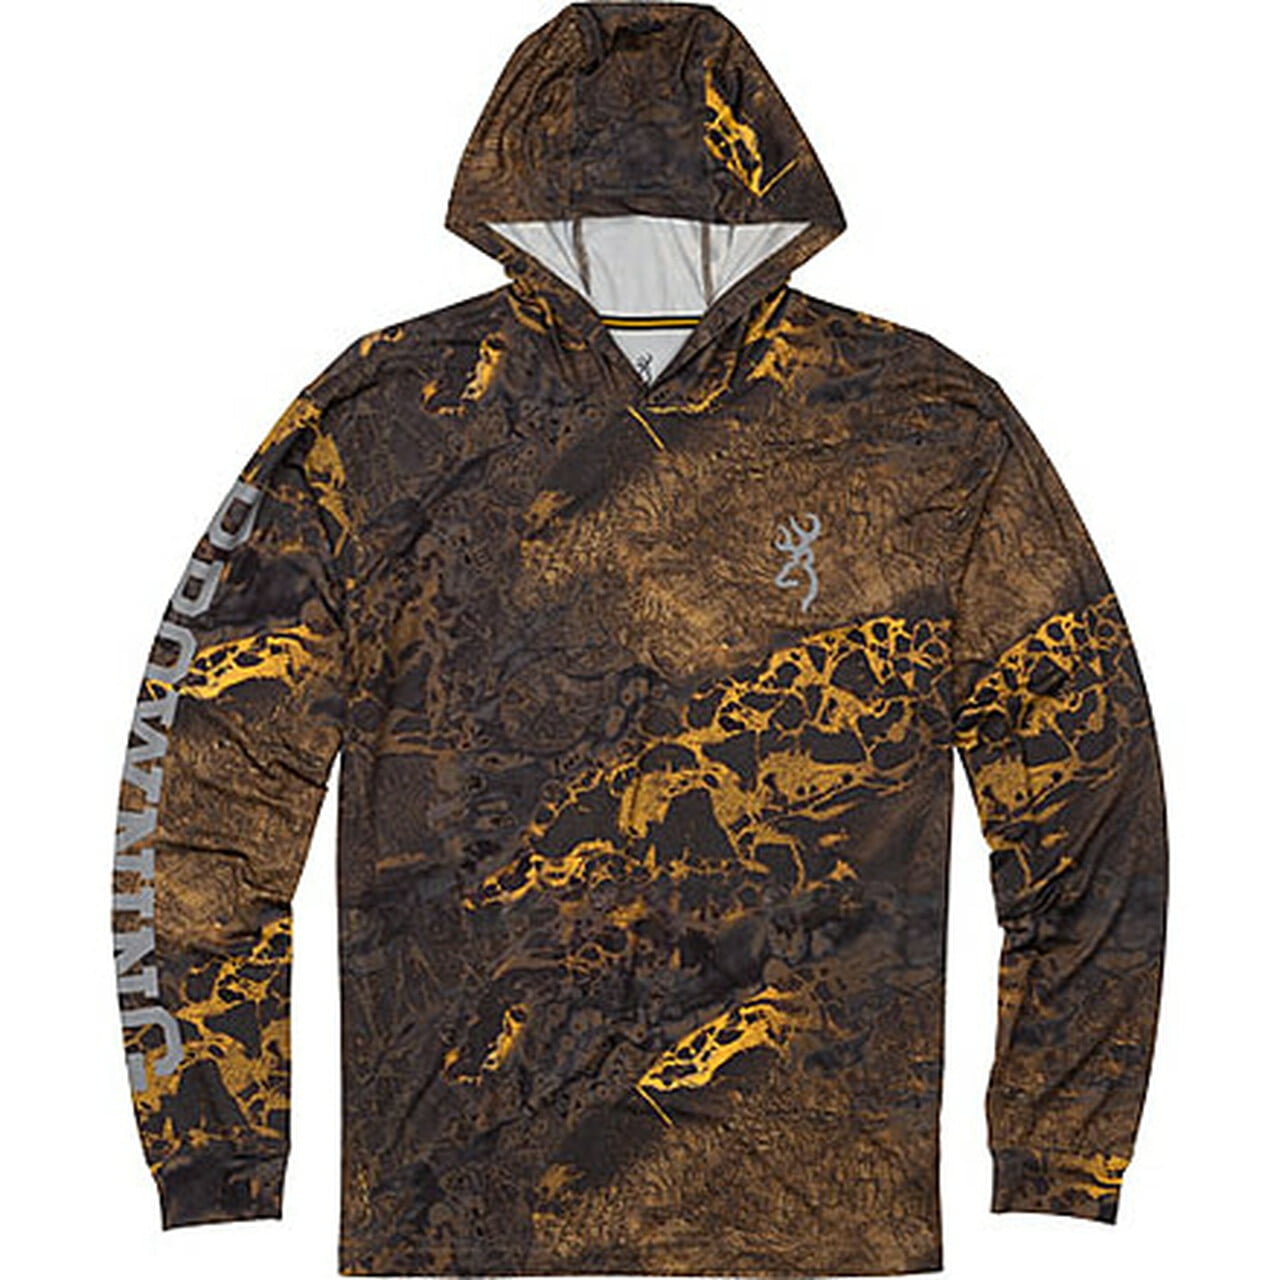 Black 3 Sizes Fishing Gift FAST POST! Quality Browning Fishing Sweatshirt 